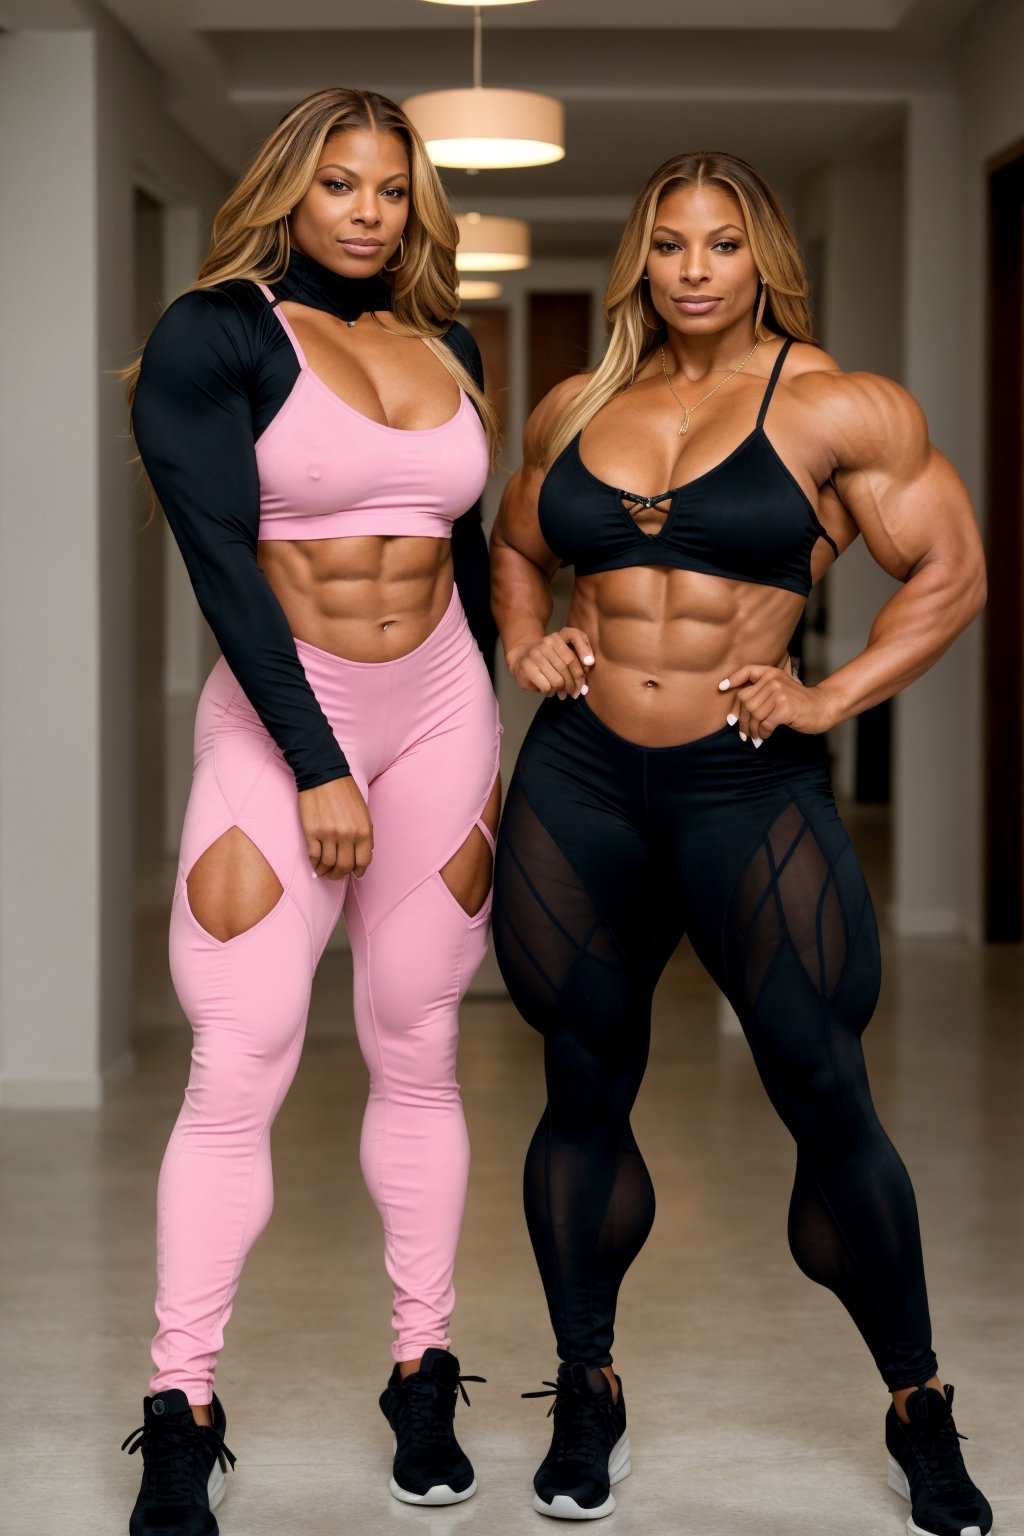 Troy Luxor - just make it happen 🔥🔥TroyLuxor.com #fitness #bodybuilding  #troyluxor @troyluxor #fit #figure #model #fitnessmotivation  #fitnessgirl